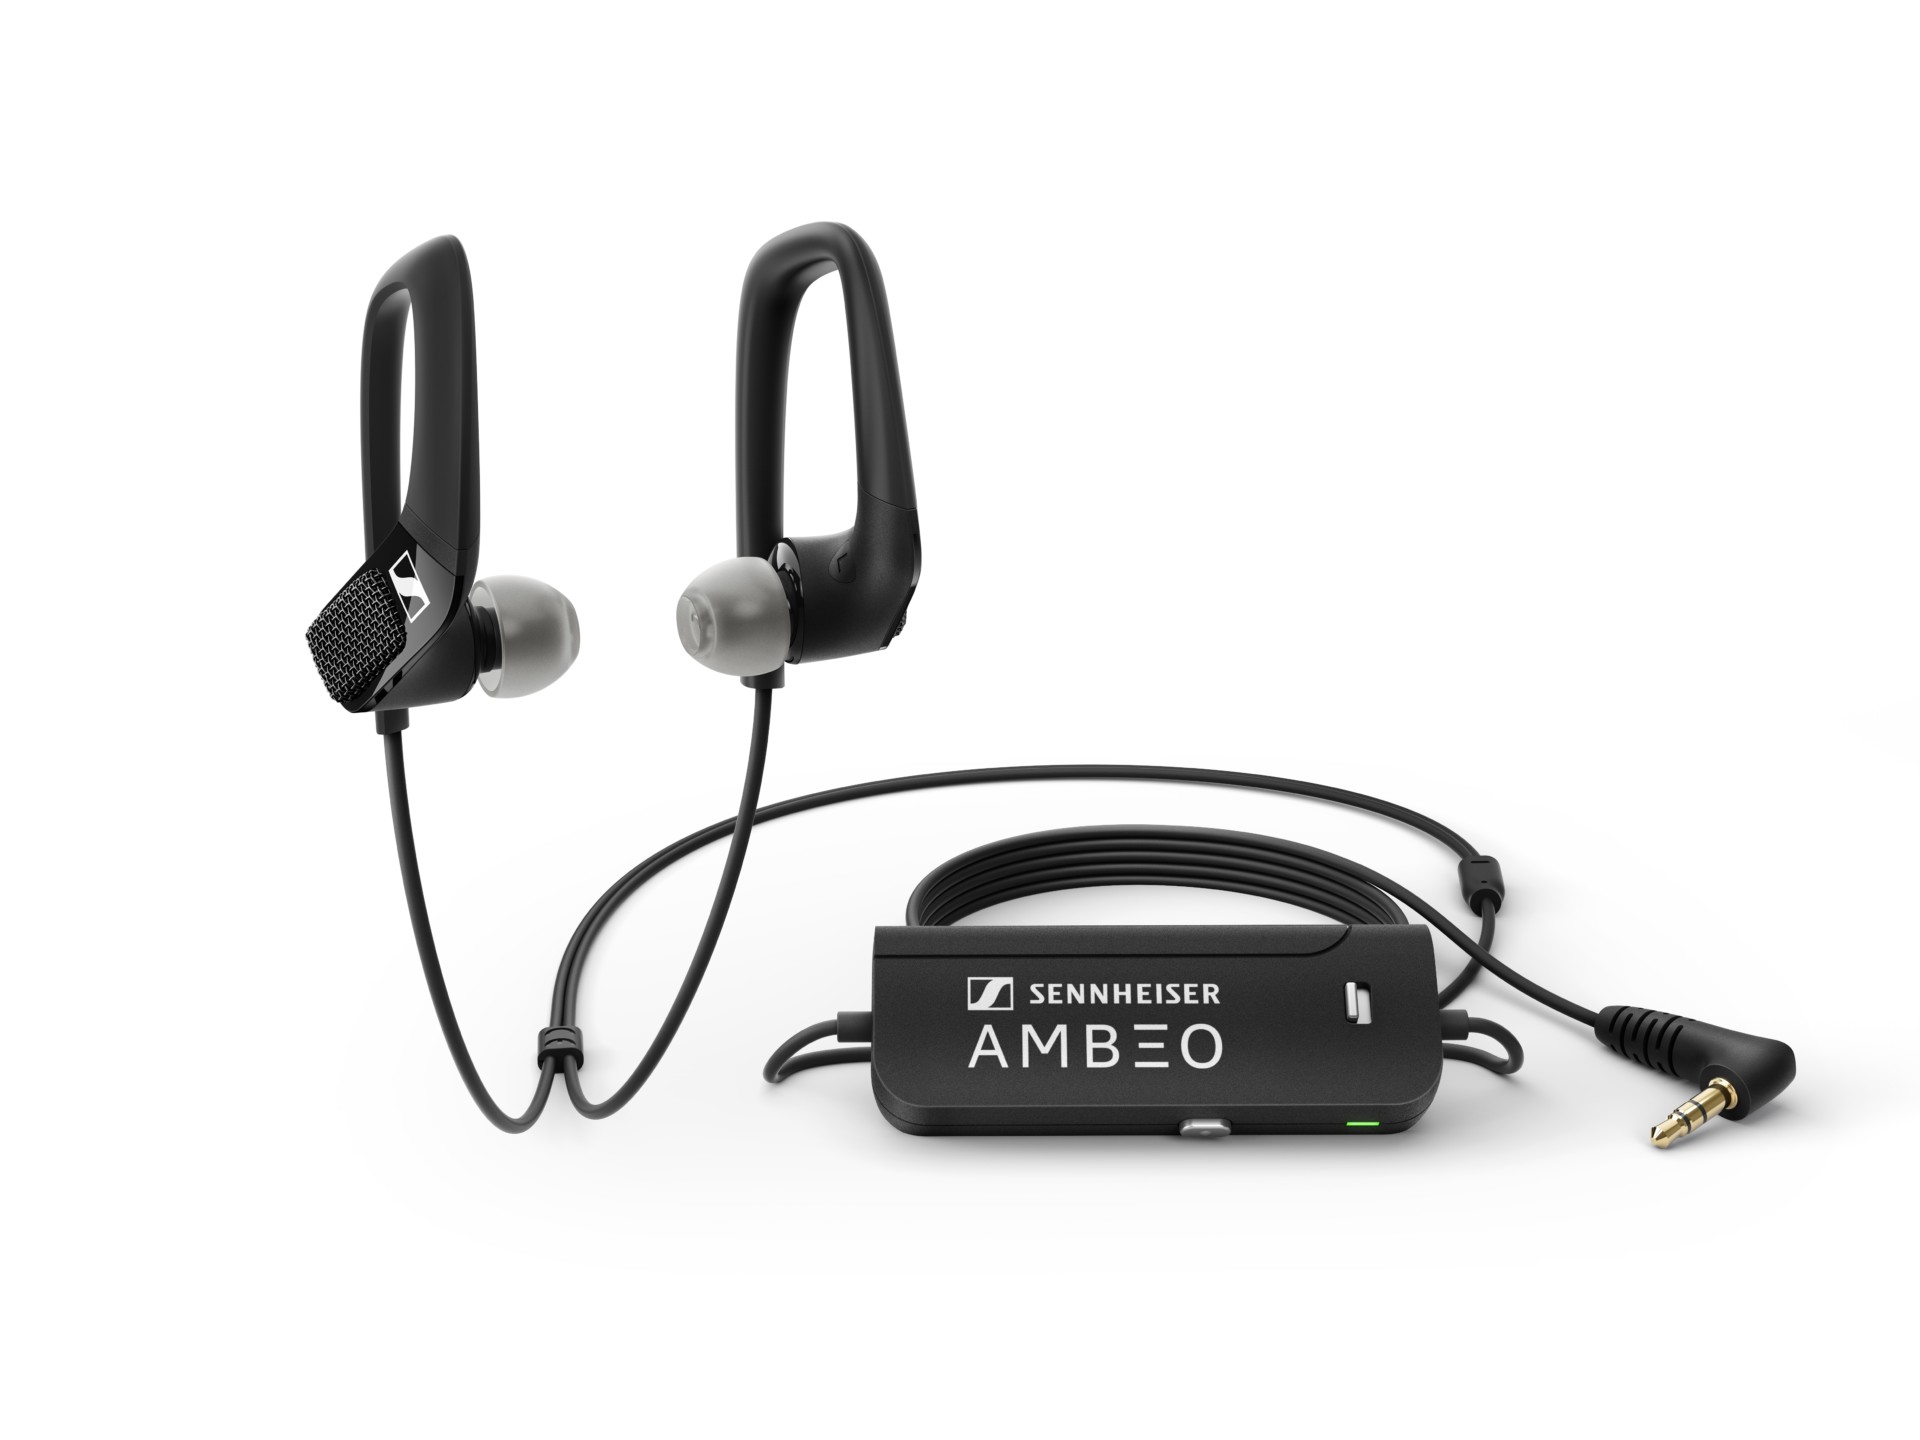 Sennheiser Ambeo AR One earphones product image detailing remote on white background.